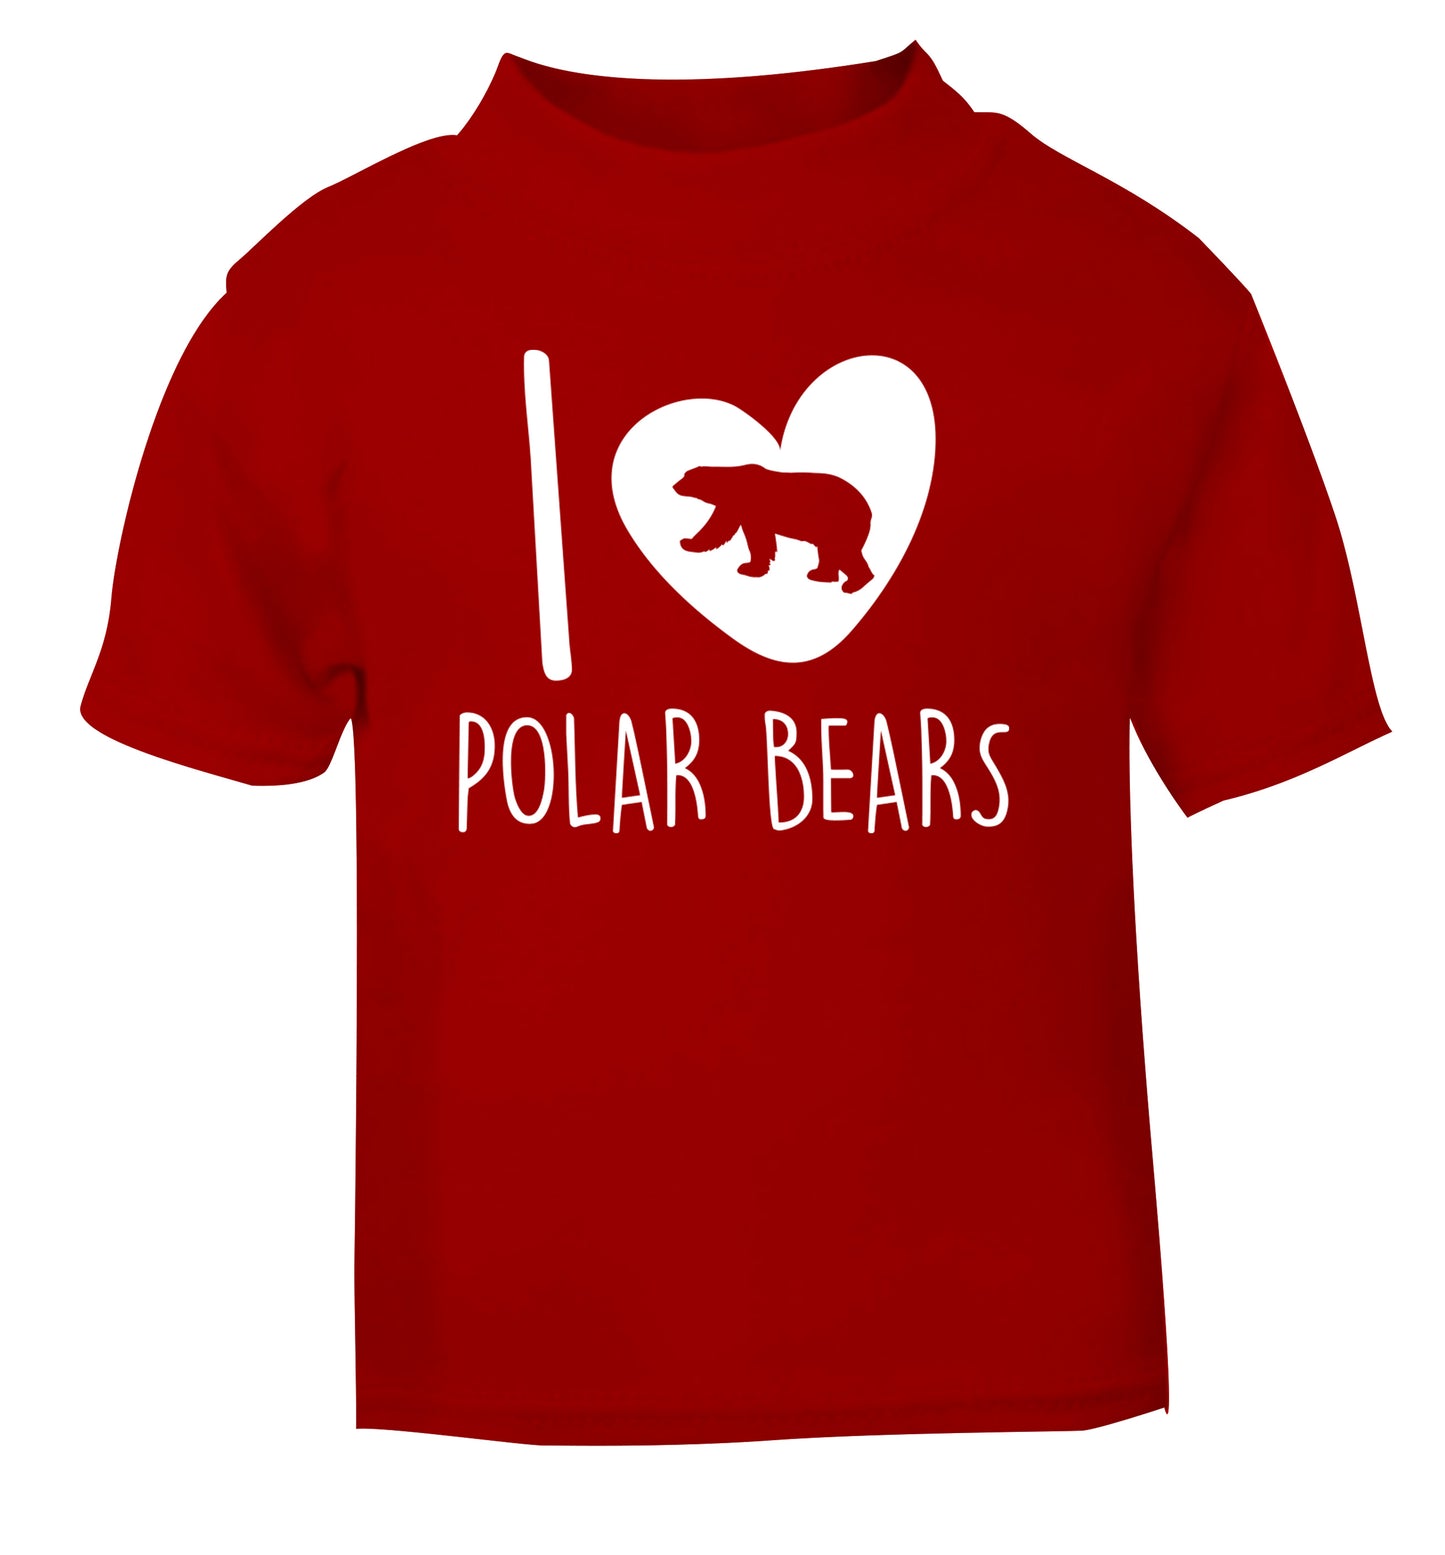 I Love Polar Bears red Baby Toddler Tshirt 2 Years